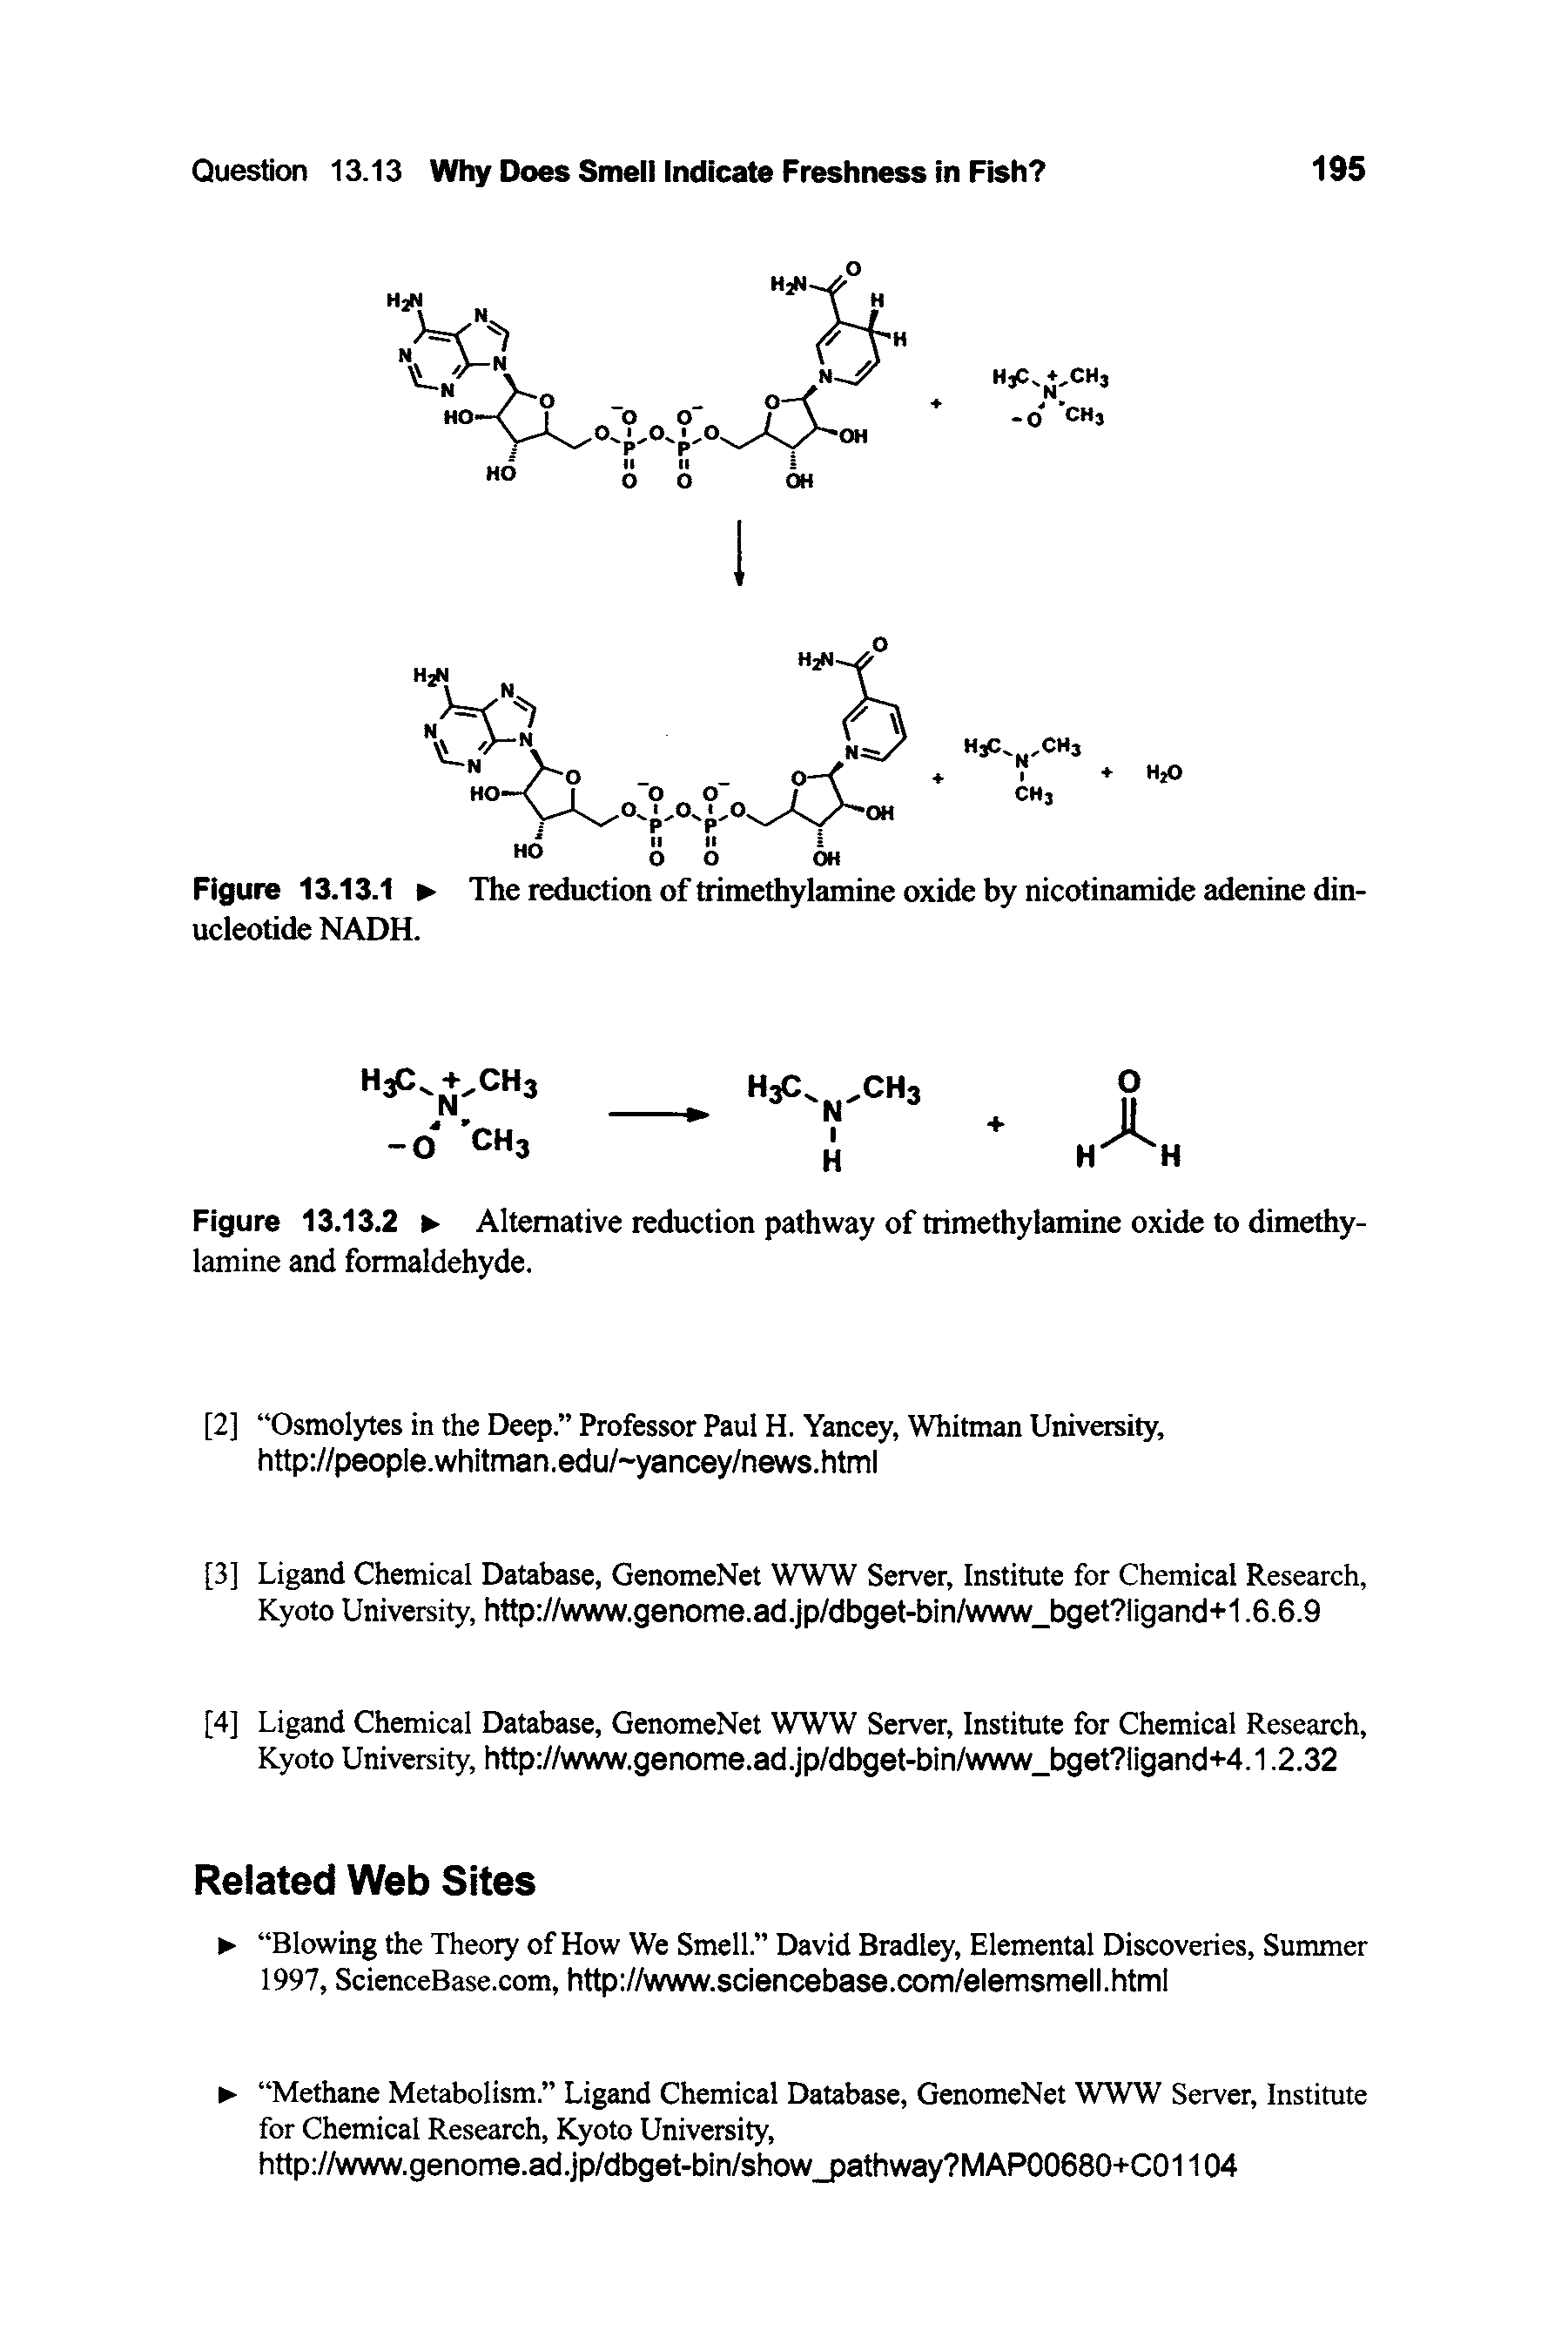 Figure 13.13.2 Alternative reduction pathway of trimethylamine oxide to dimethy-lamine and formaldehyde.